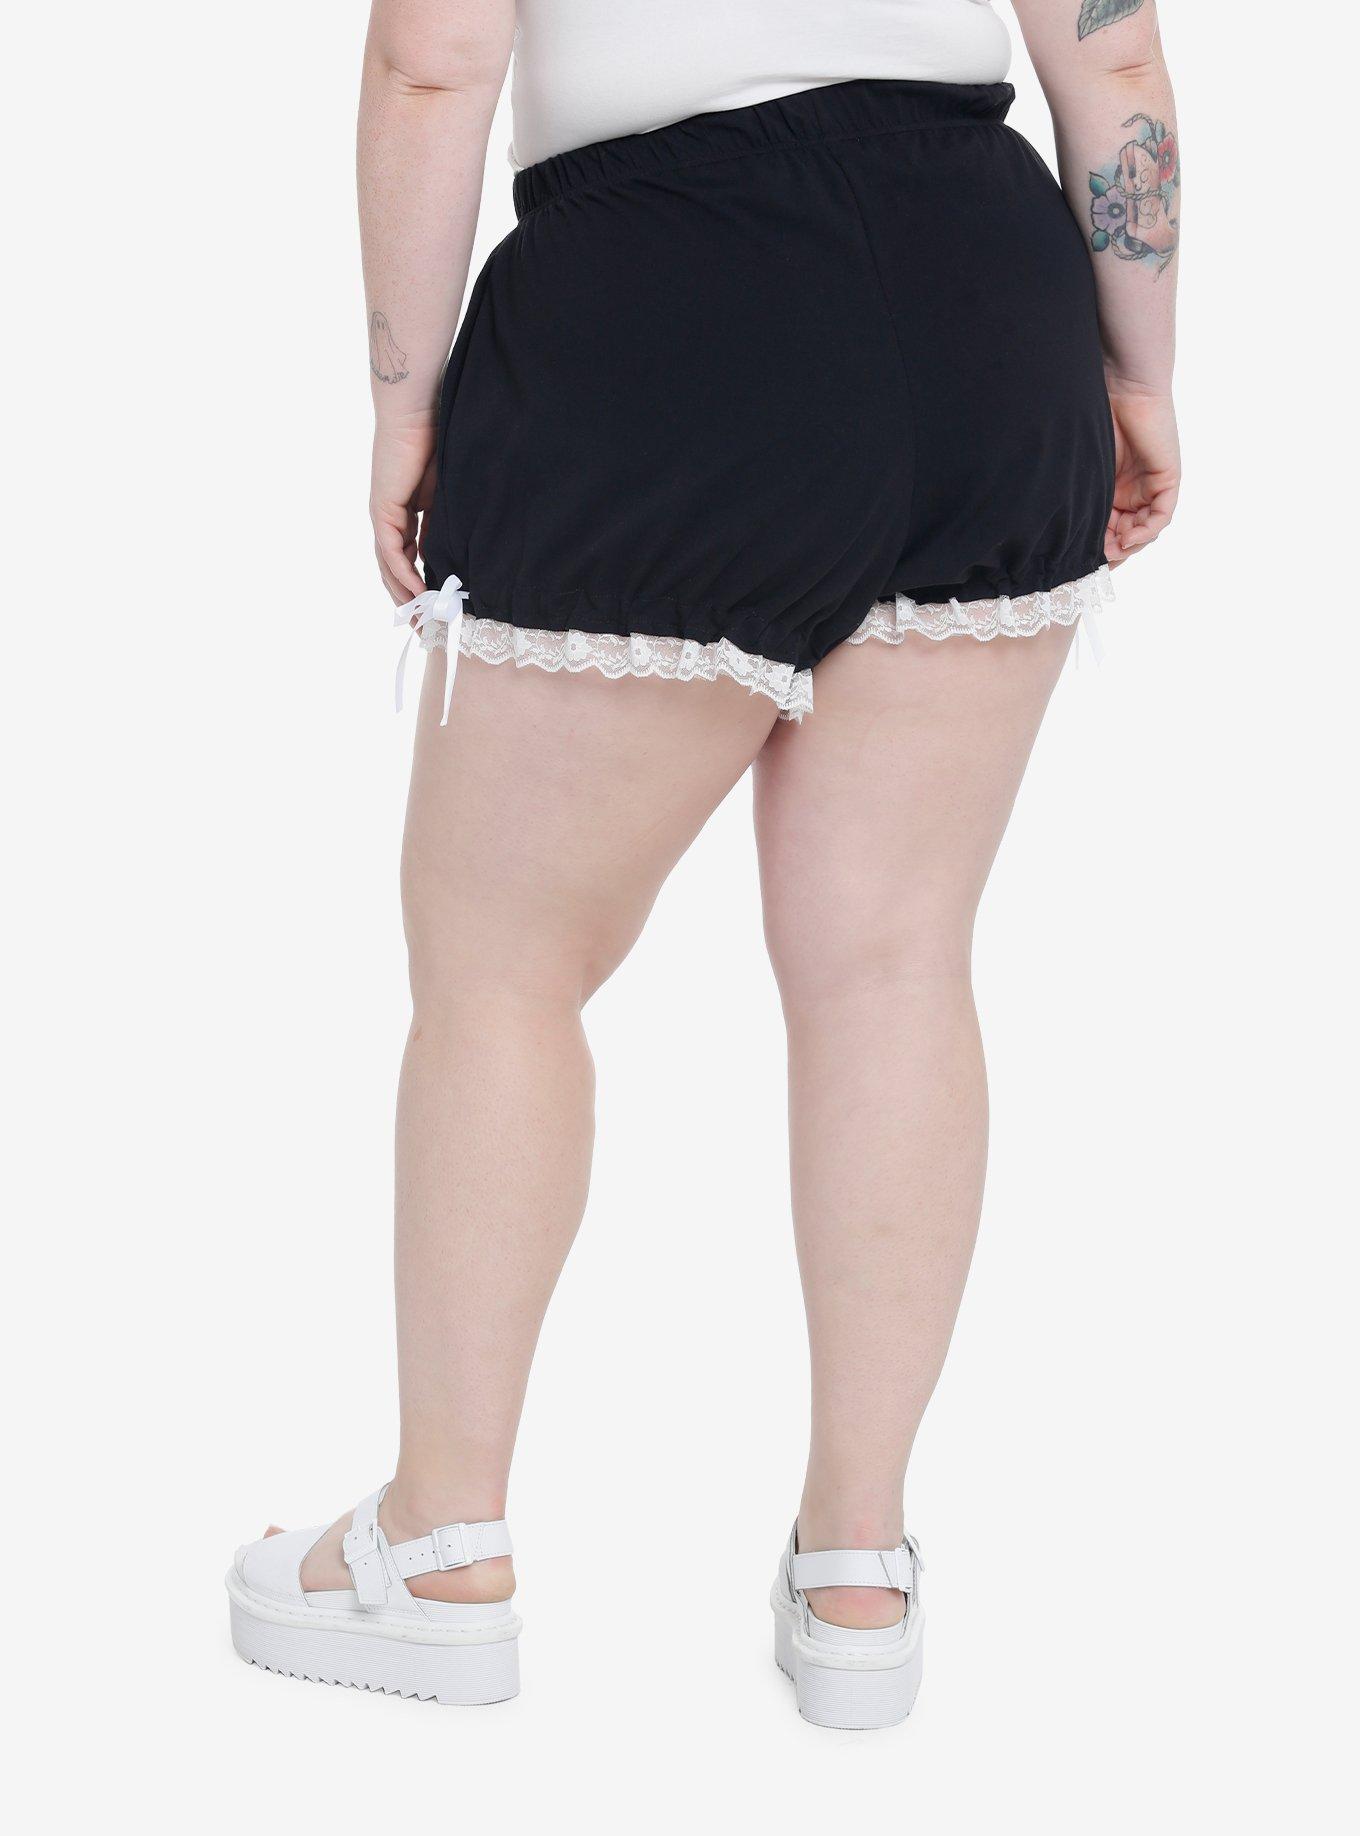 Black & White Lace Balloon Lounge Shorts Plus Size, BLACK, alternate